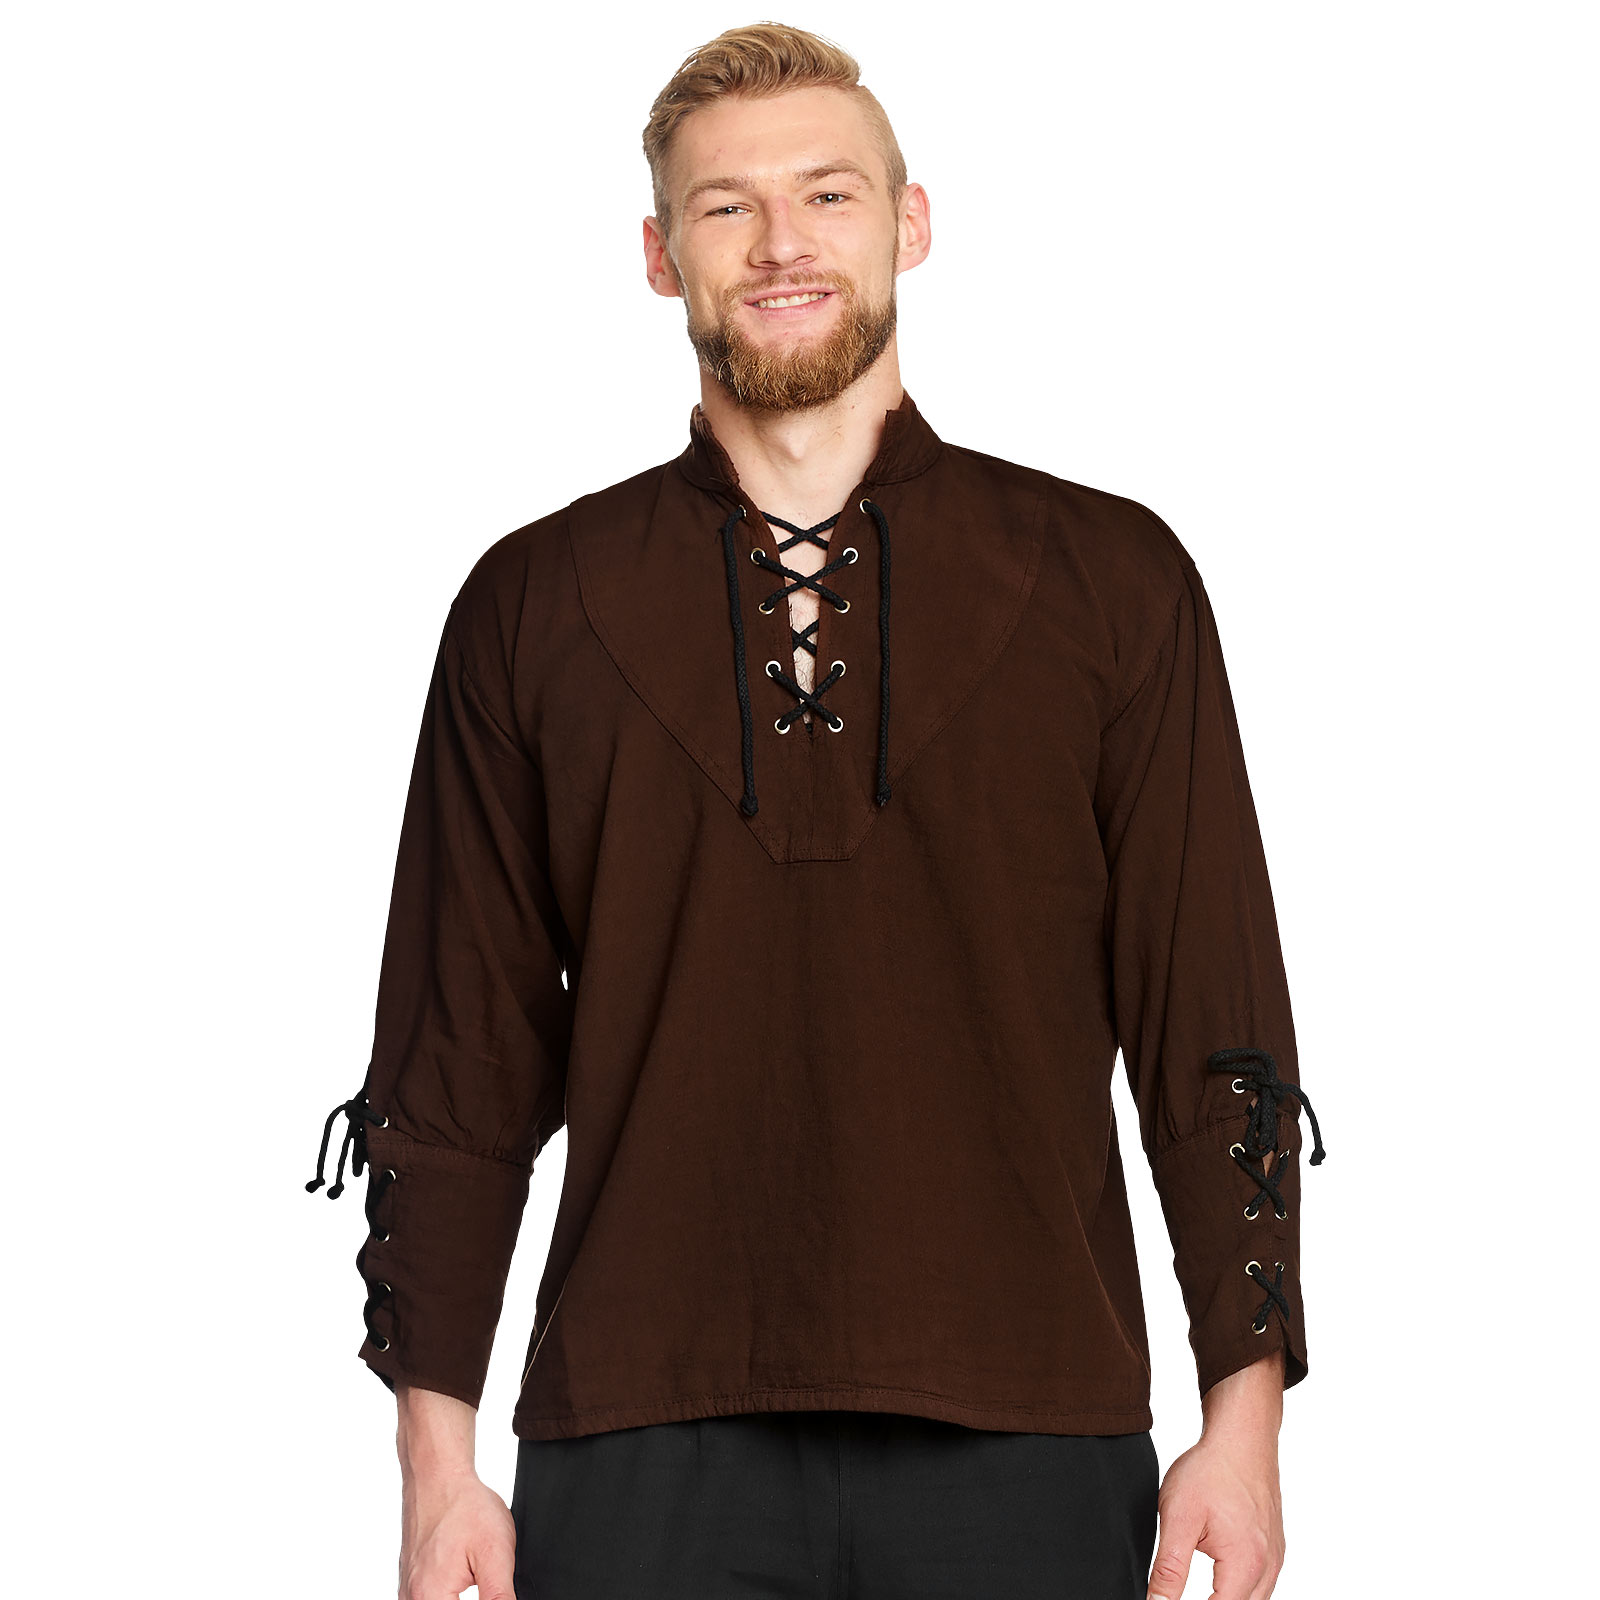 Medieval Shirt Brown